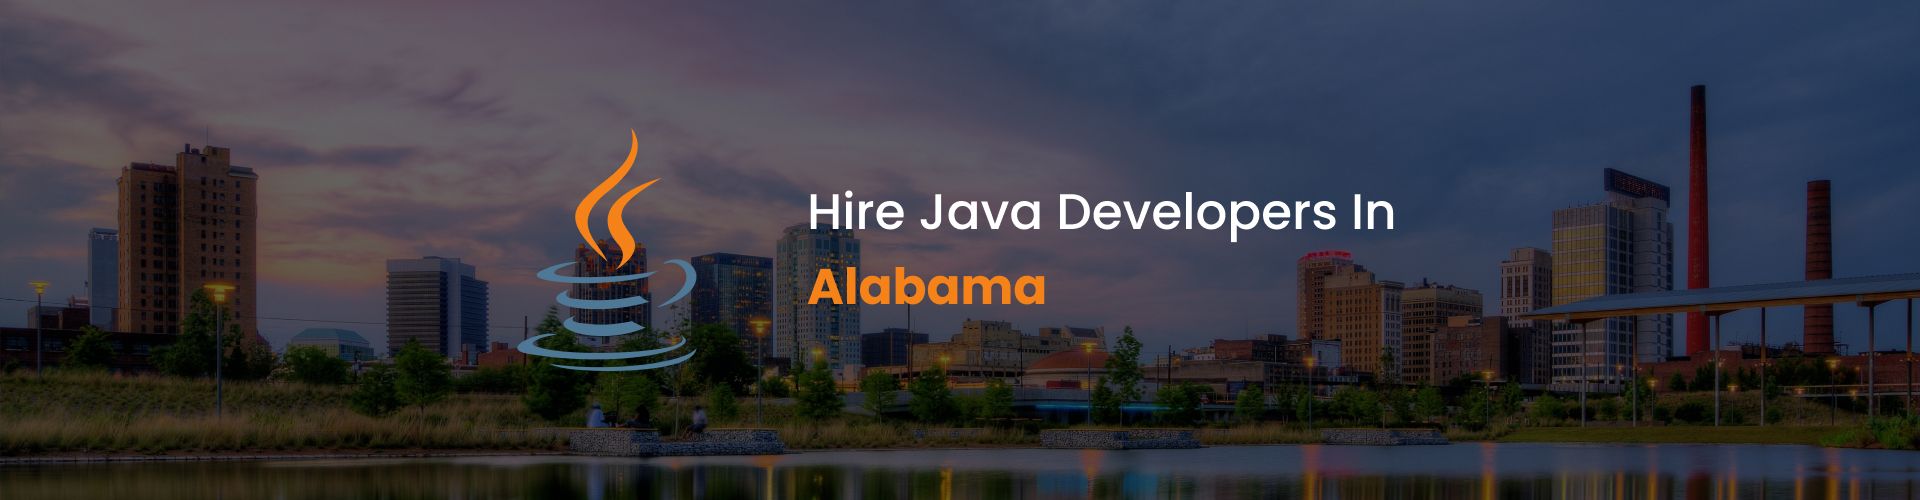 hire java developers in alabama